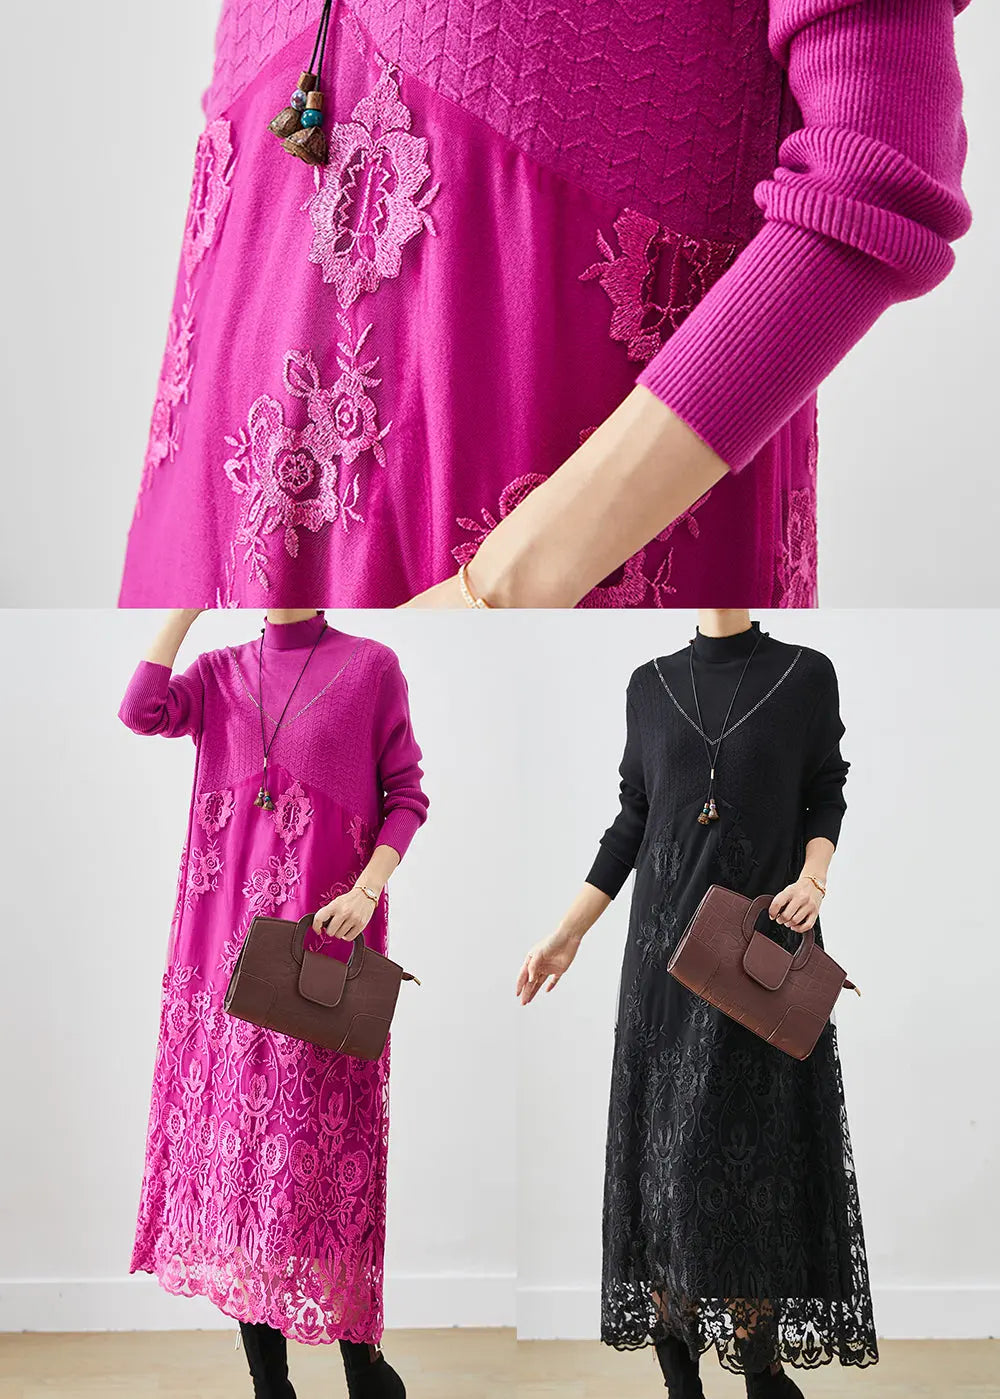 Handmade Black Embroideried Patchwork Knit Dress Fall Ada Fashion